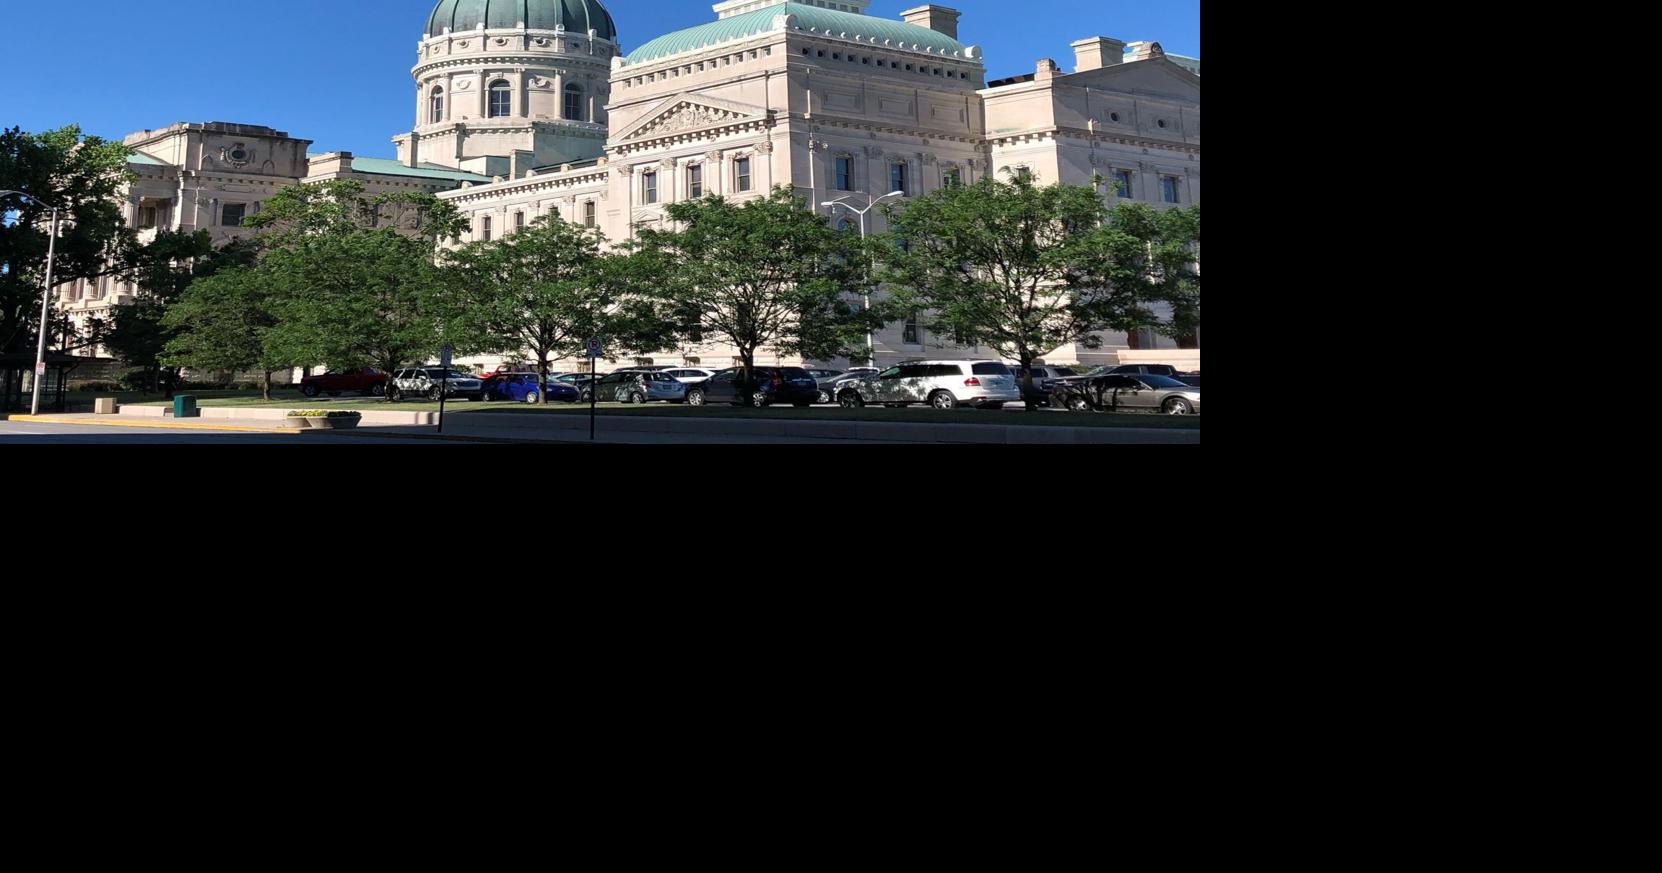 Indiana General Assembly seeking interns for 2023 legislative session